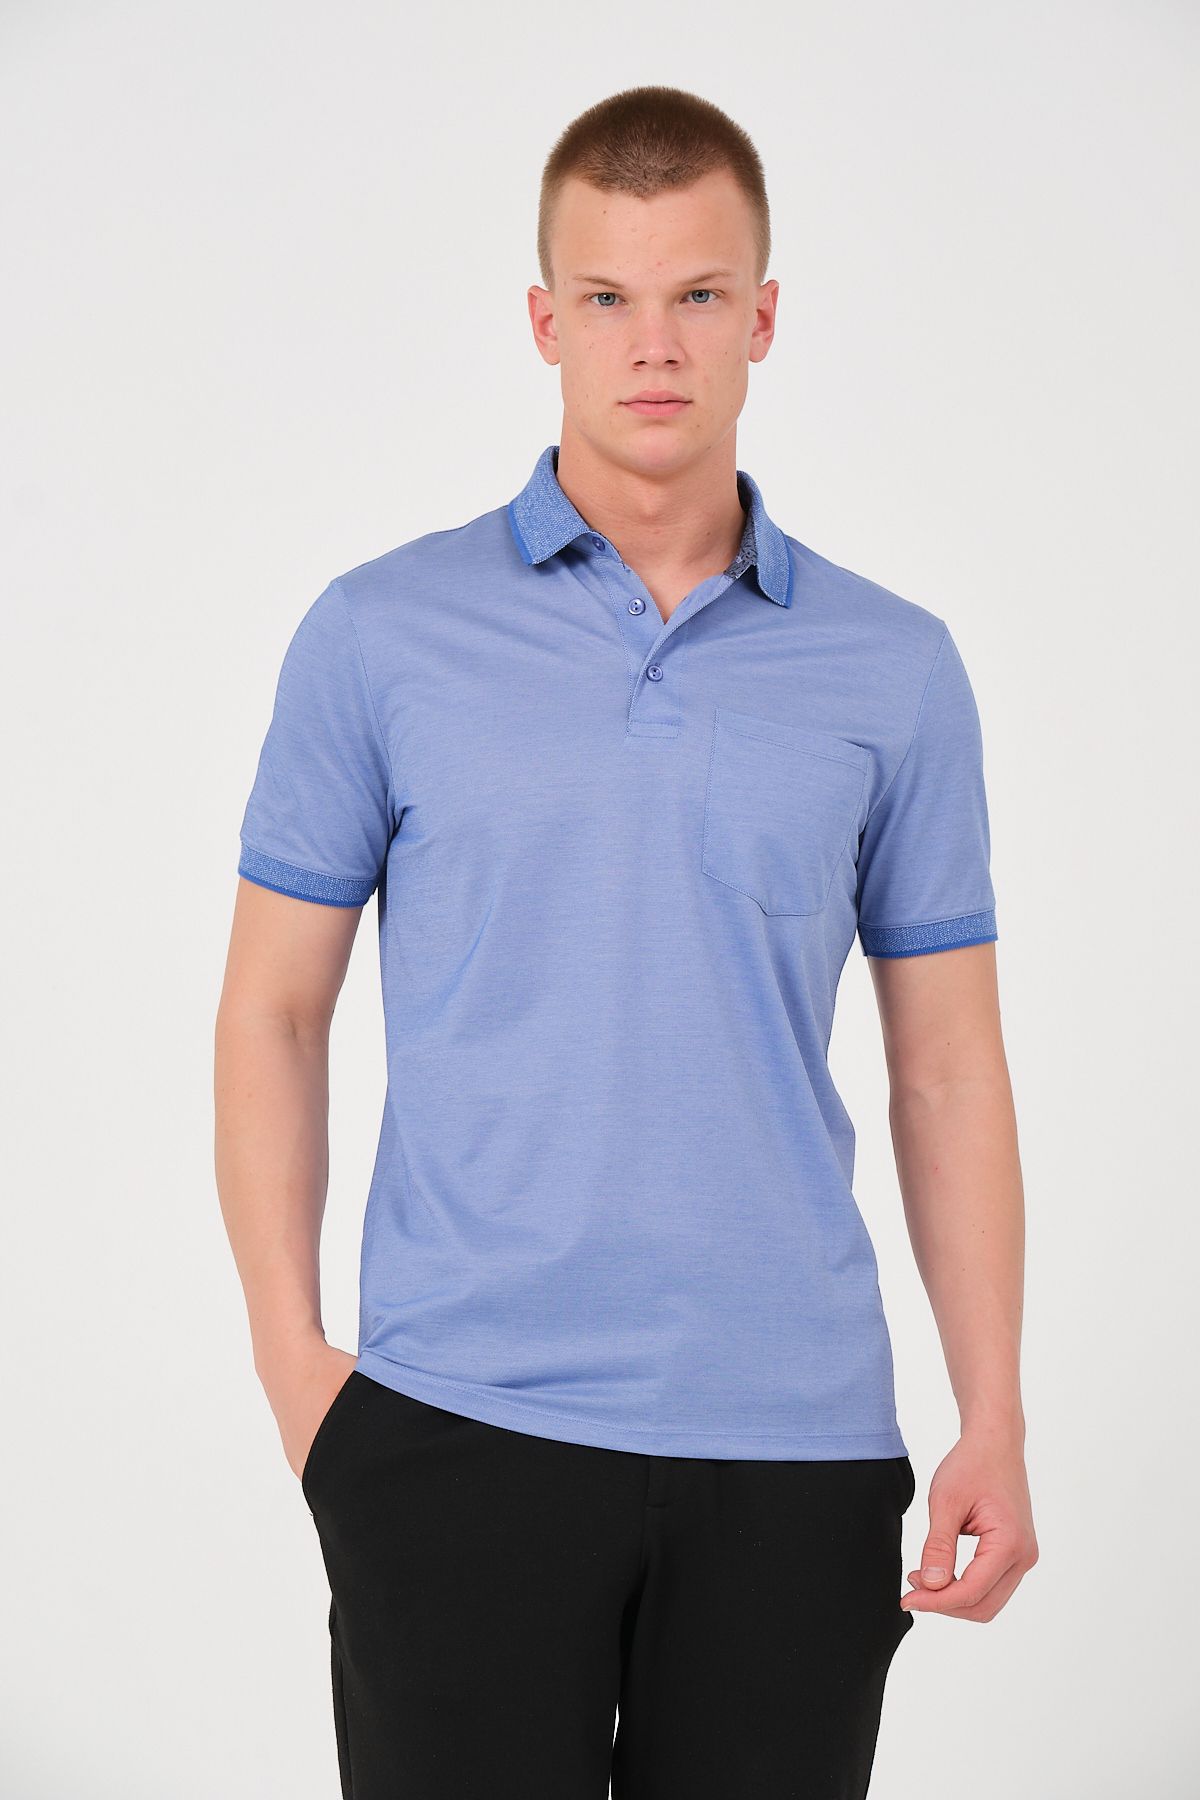 Rich Erkek Düz Renk Cepli Polo Yaka Tişört T-shirt